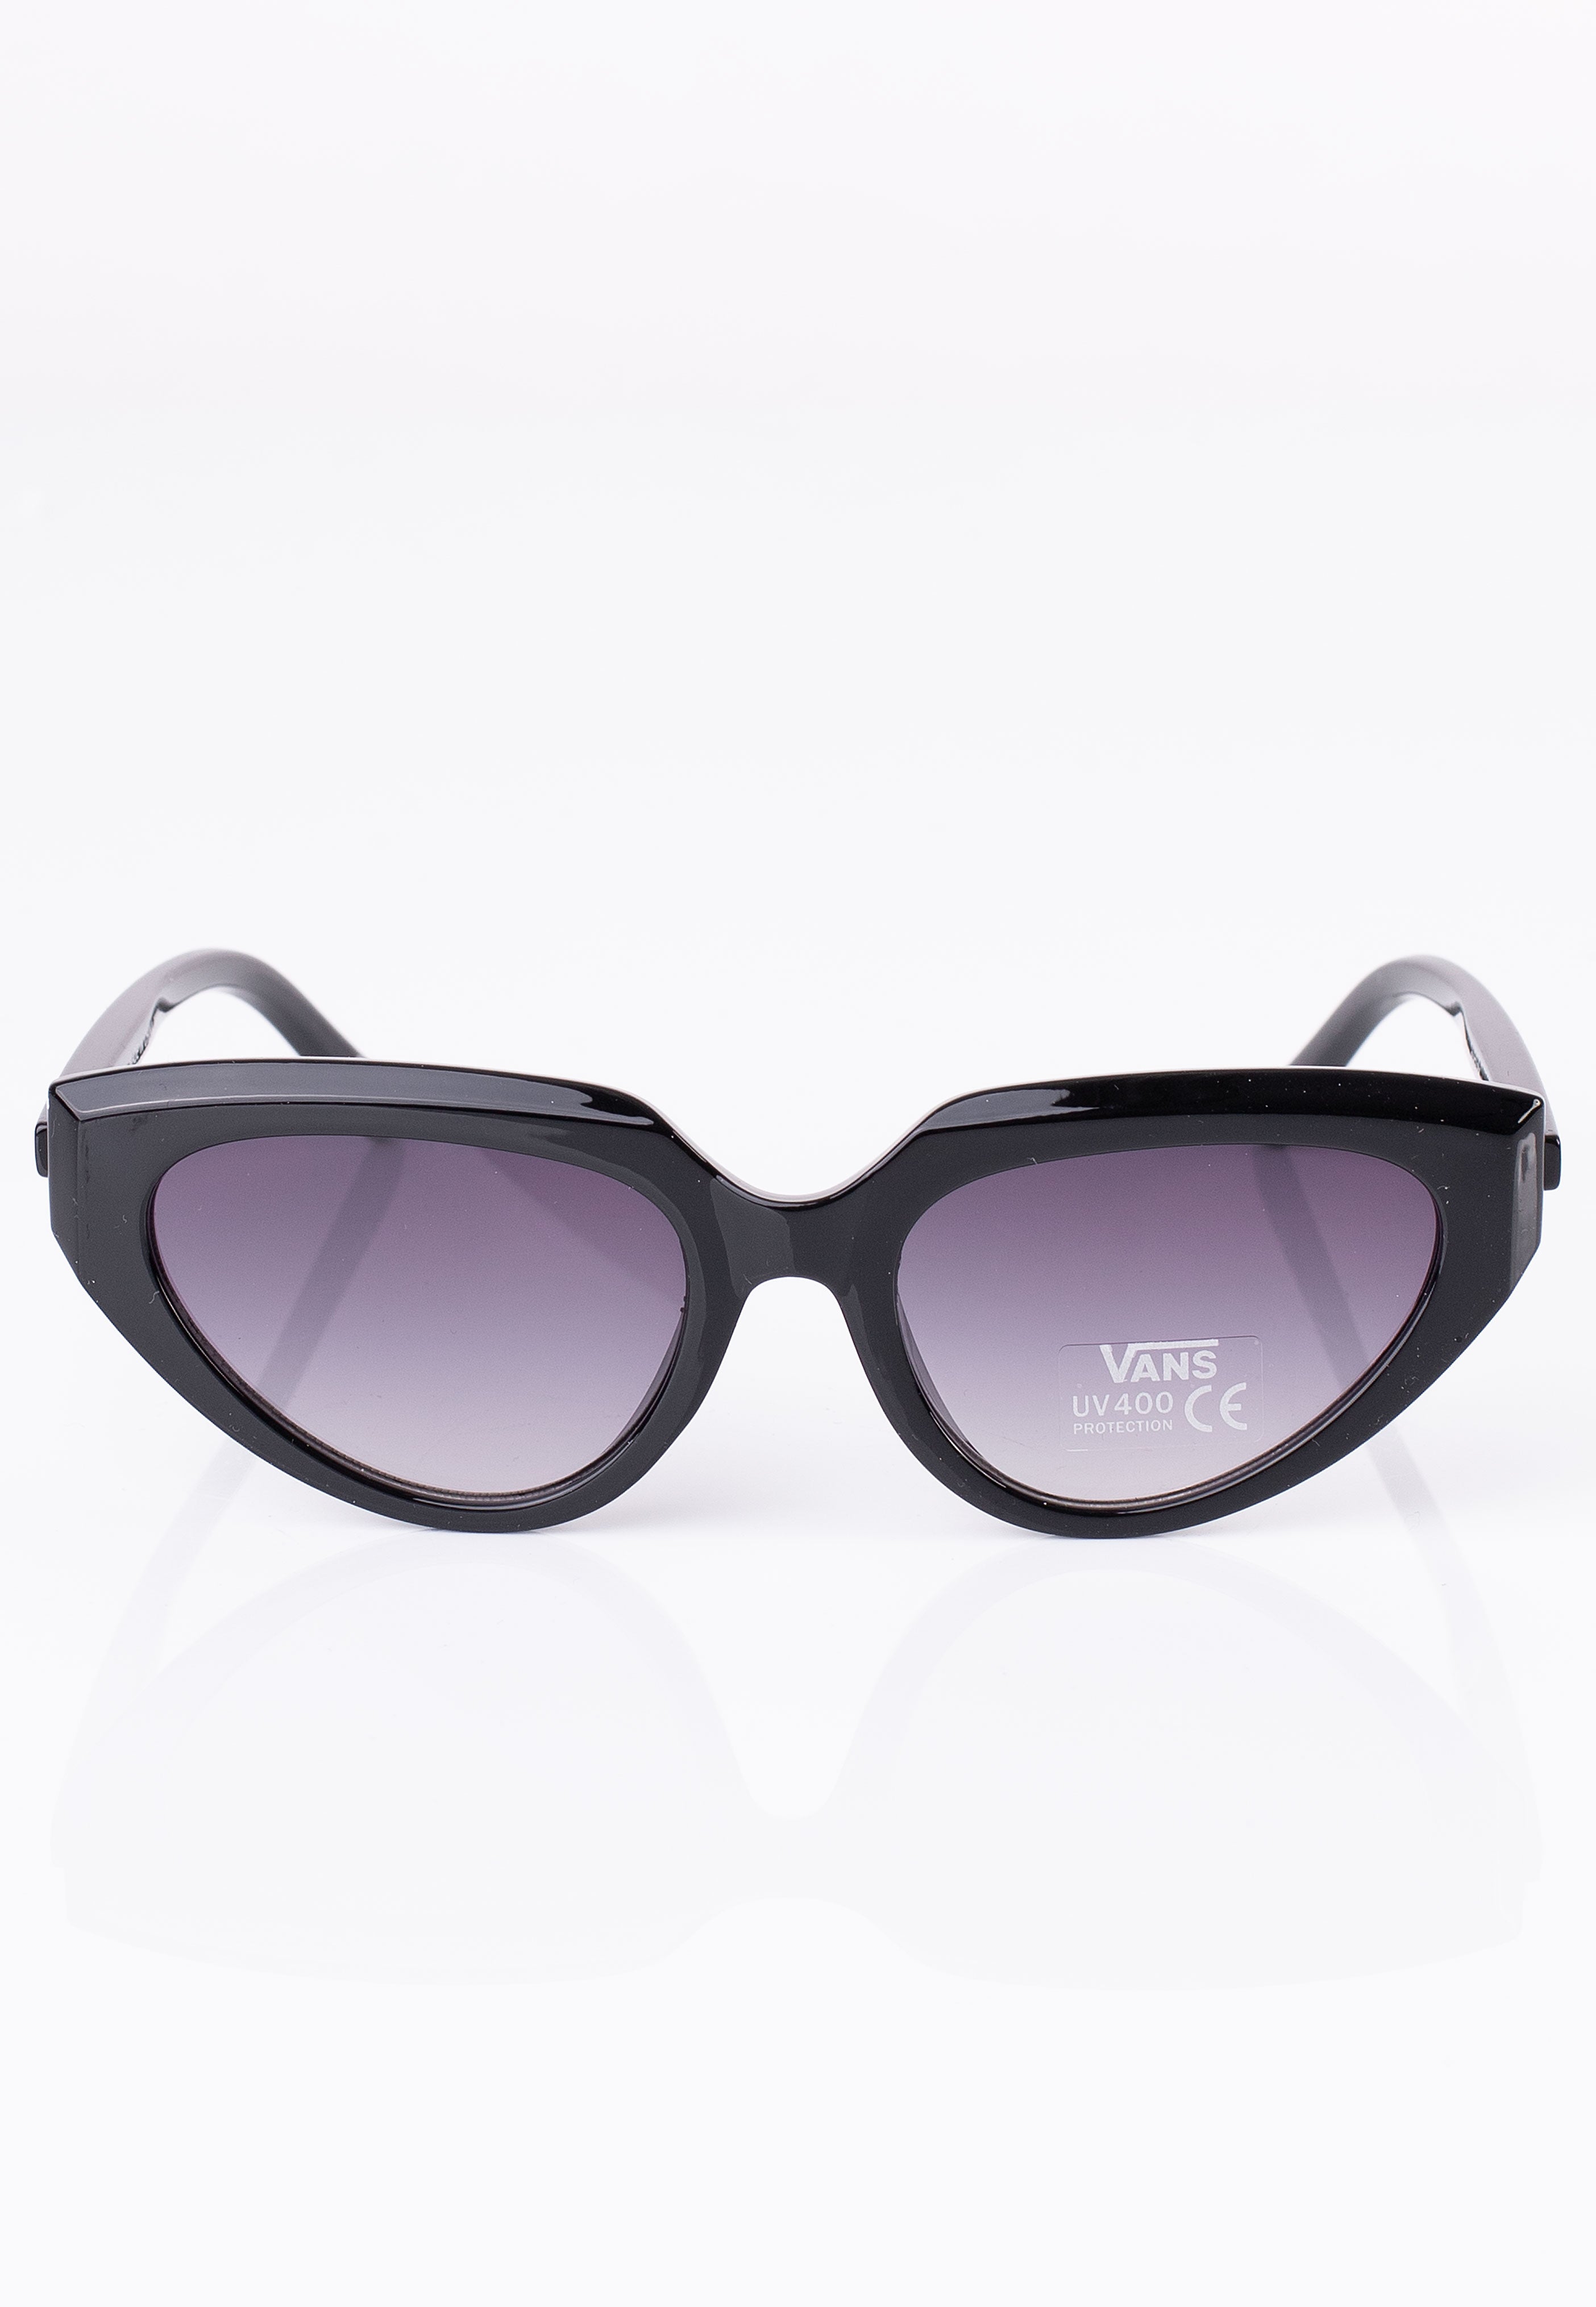 Vans - Shelby Sunglasses Black - Sunglasses